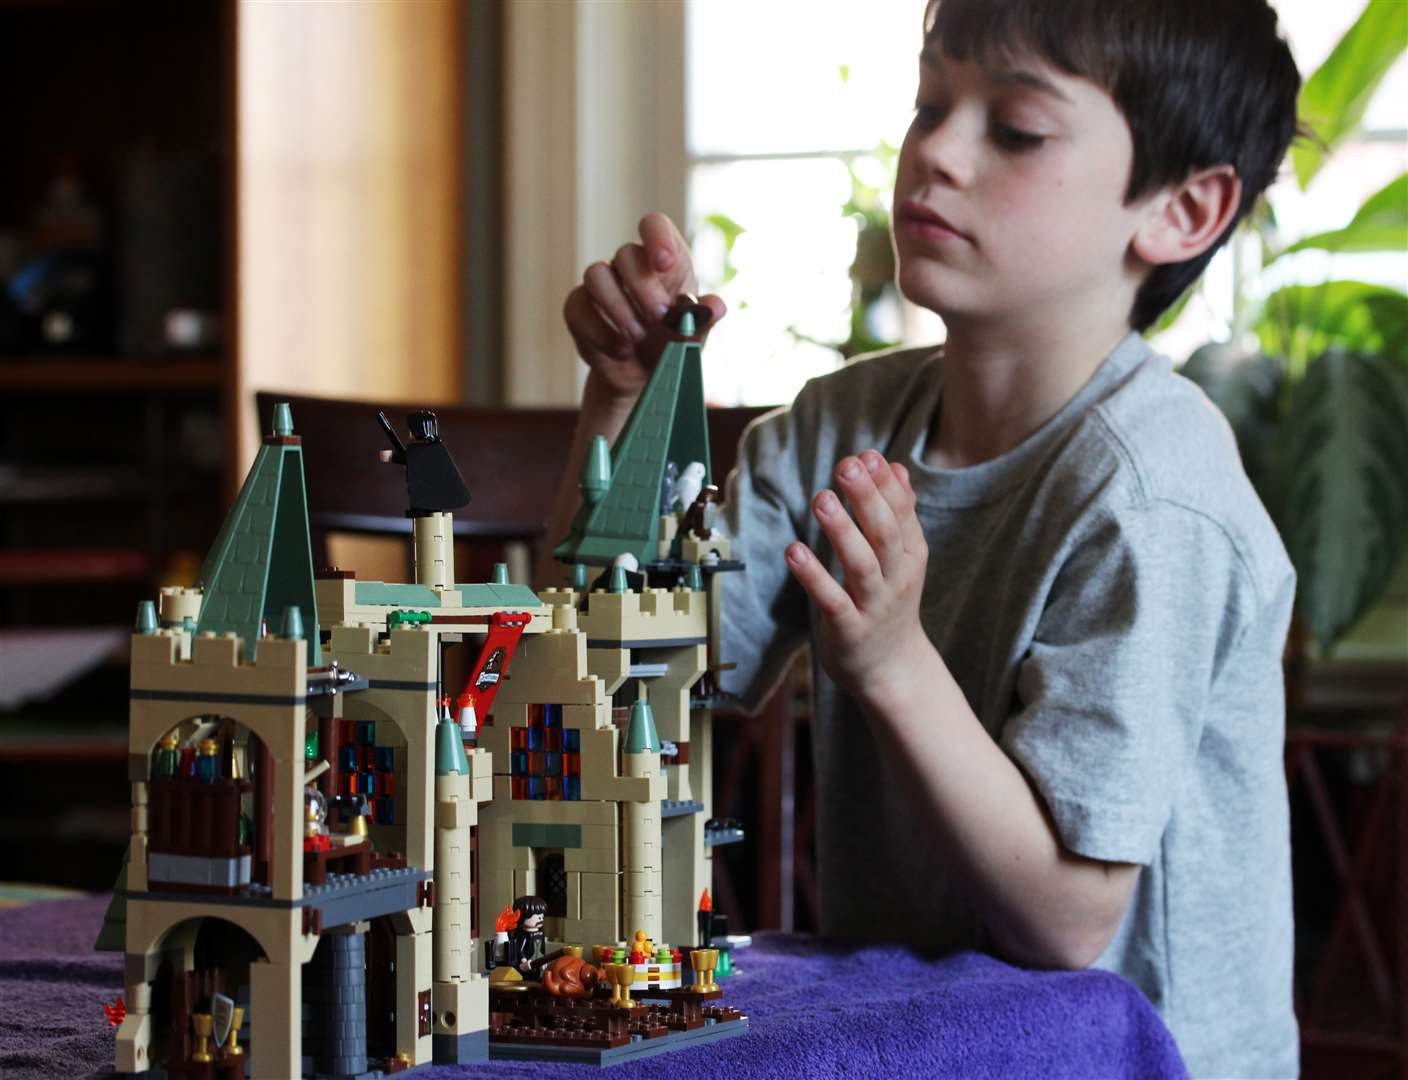 Lego had a big hit with its Harry Potter Hogwarts set.